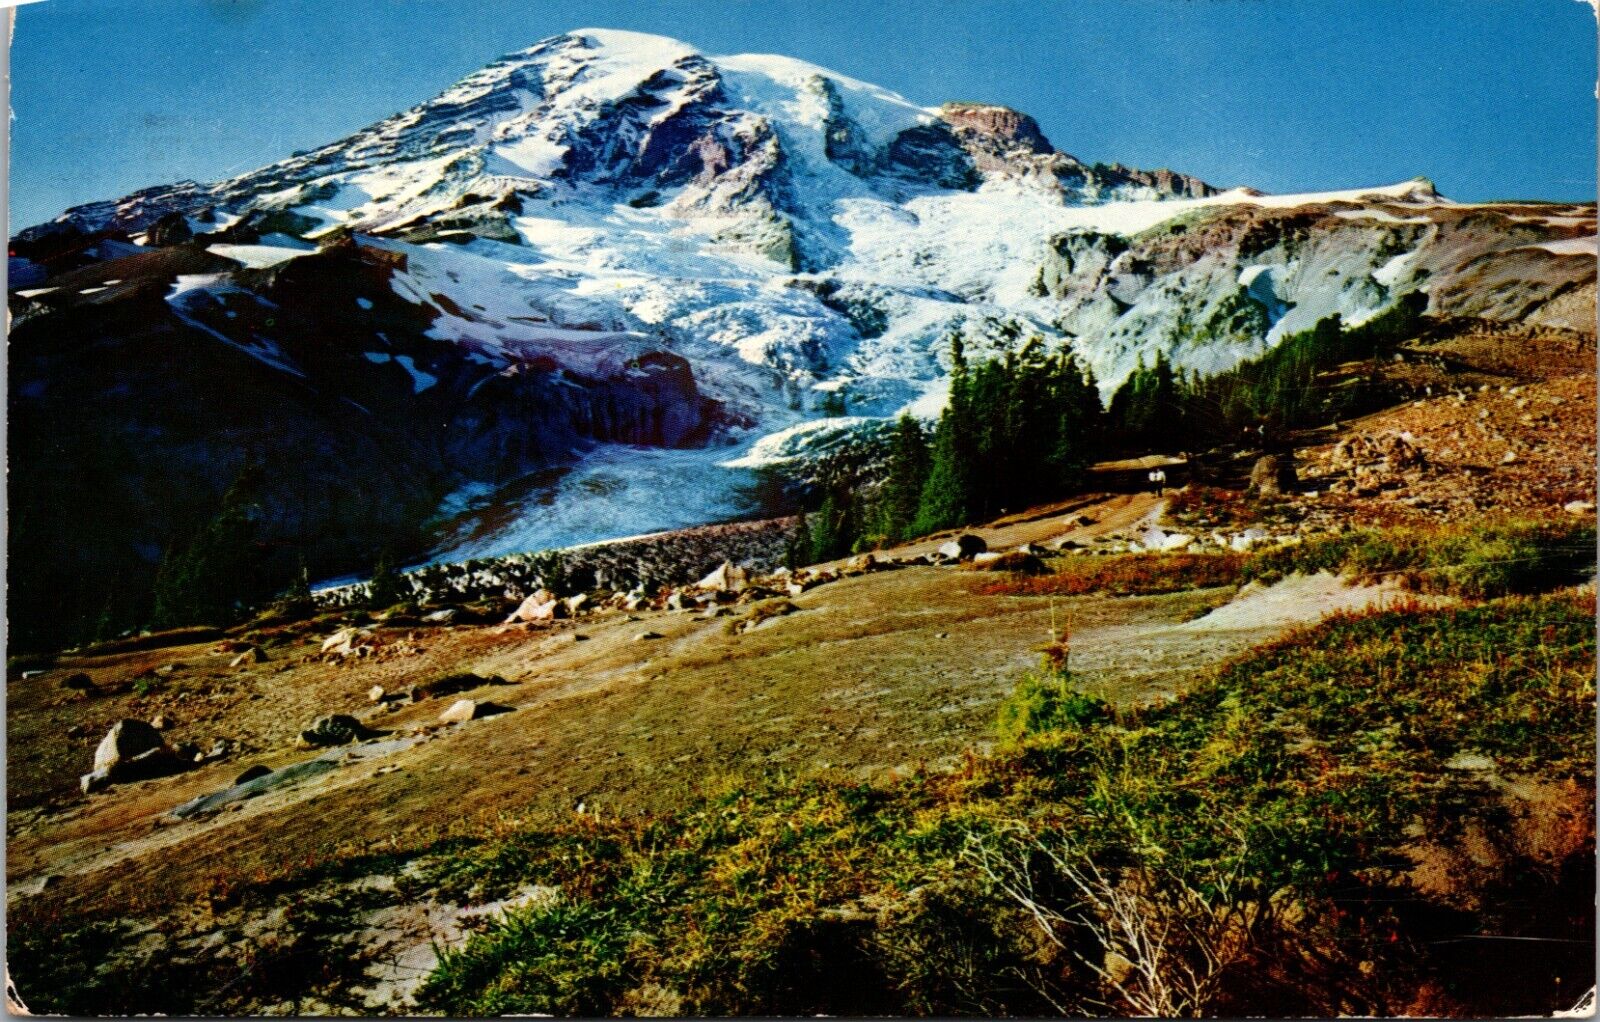 Mt Rainier Nisqually Glacier Mt Rainier National Park Washington WA Postcard L66